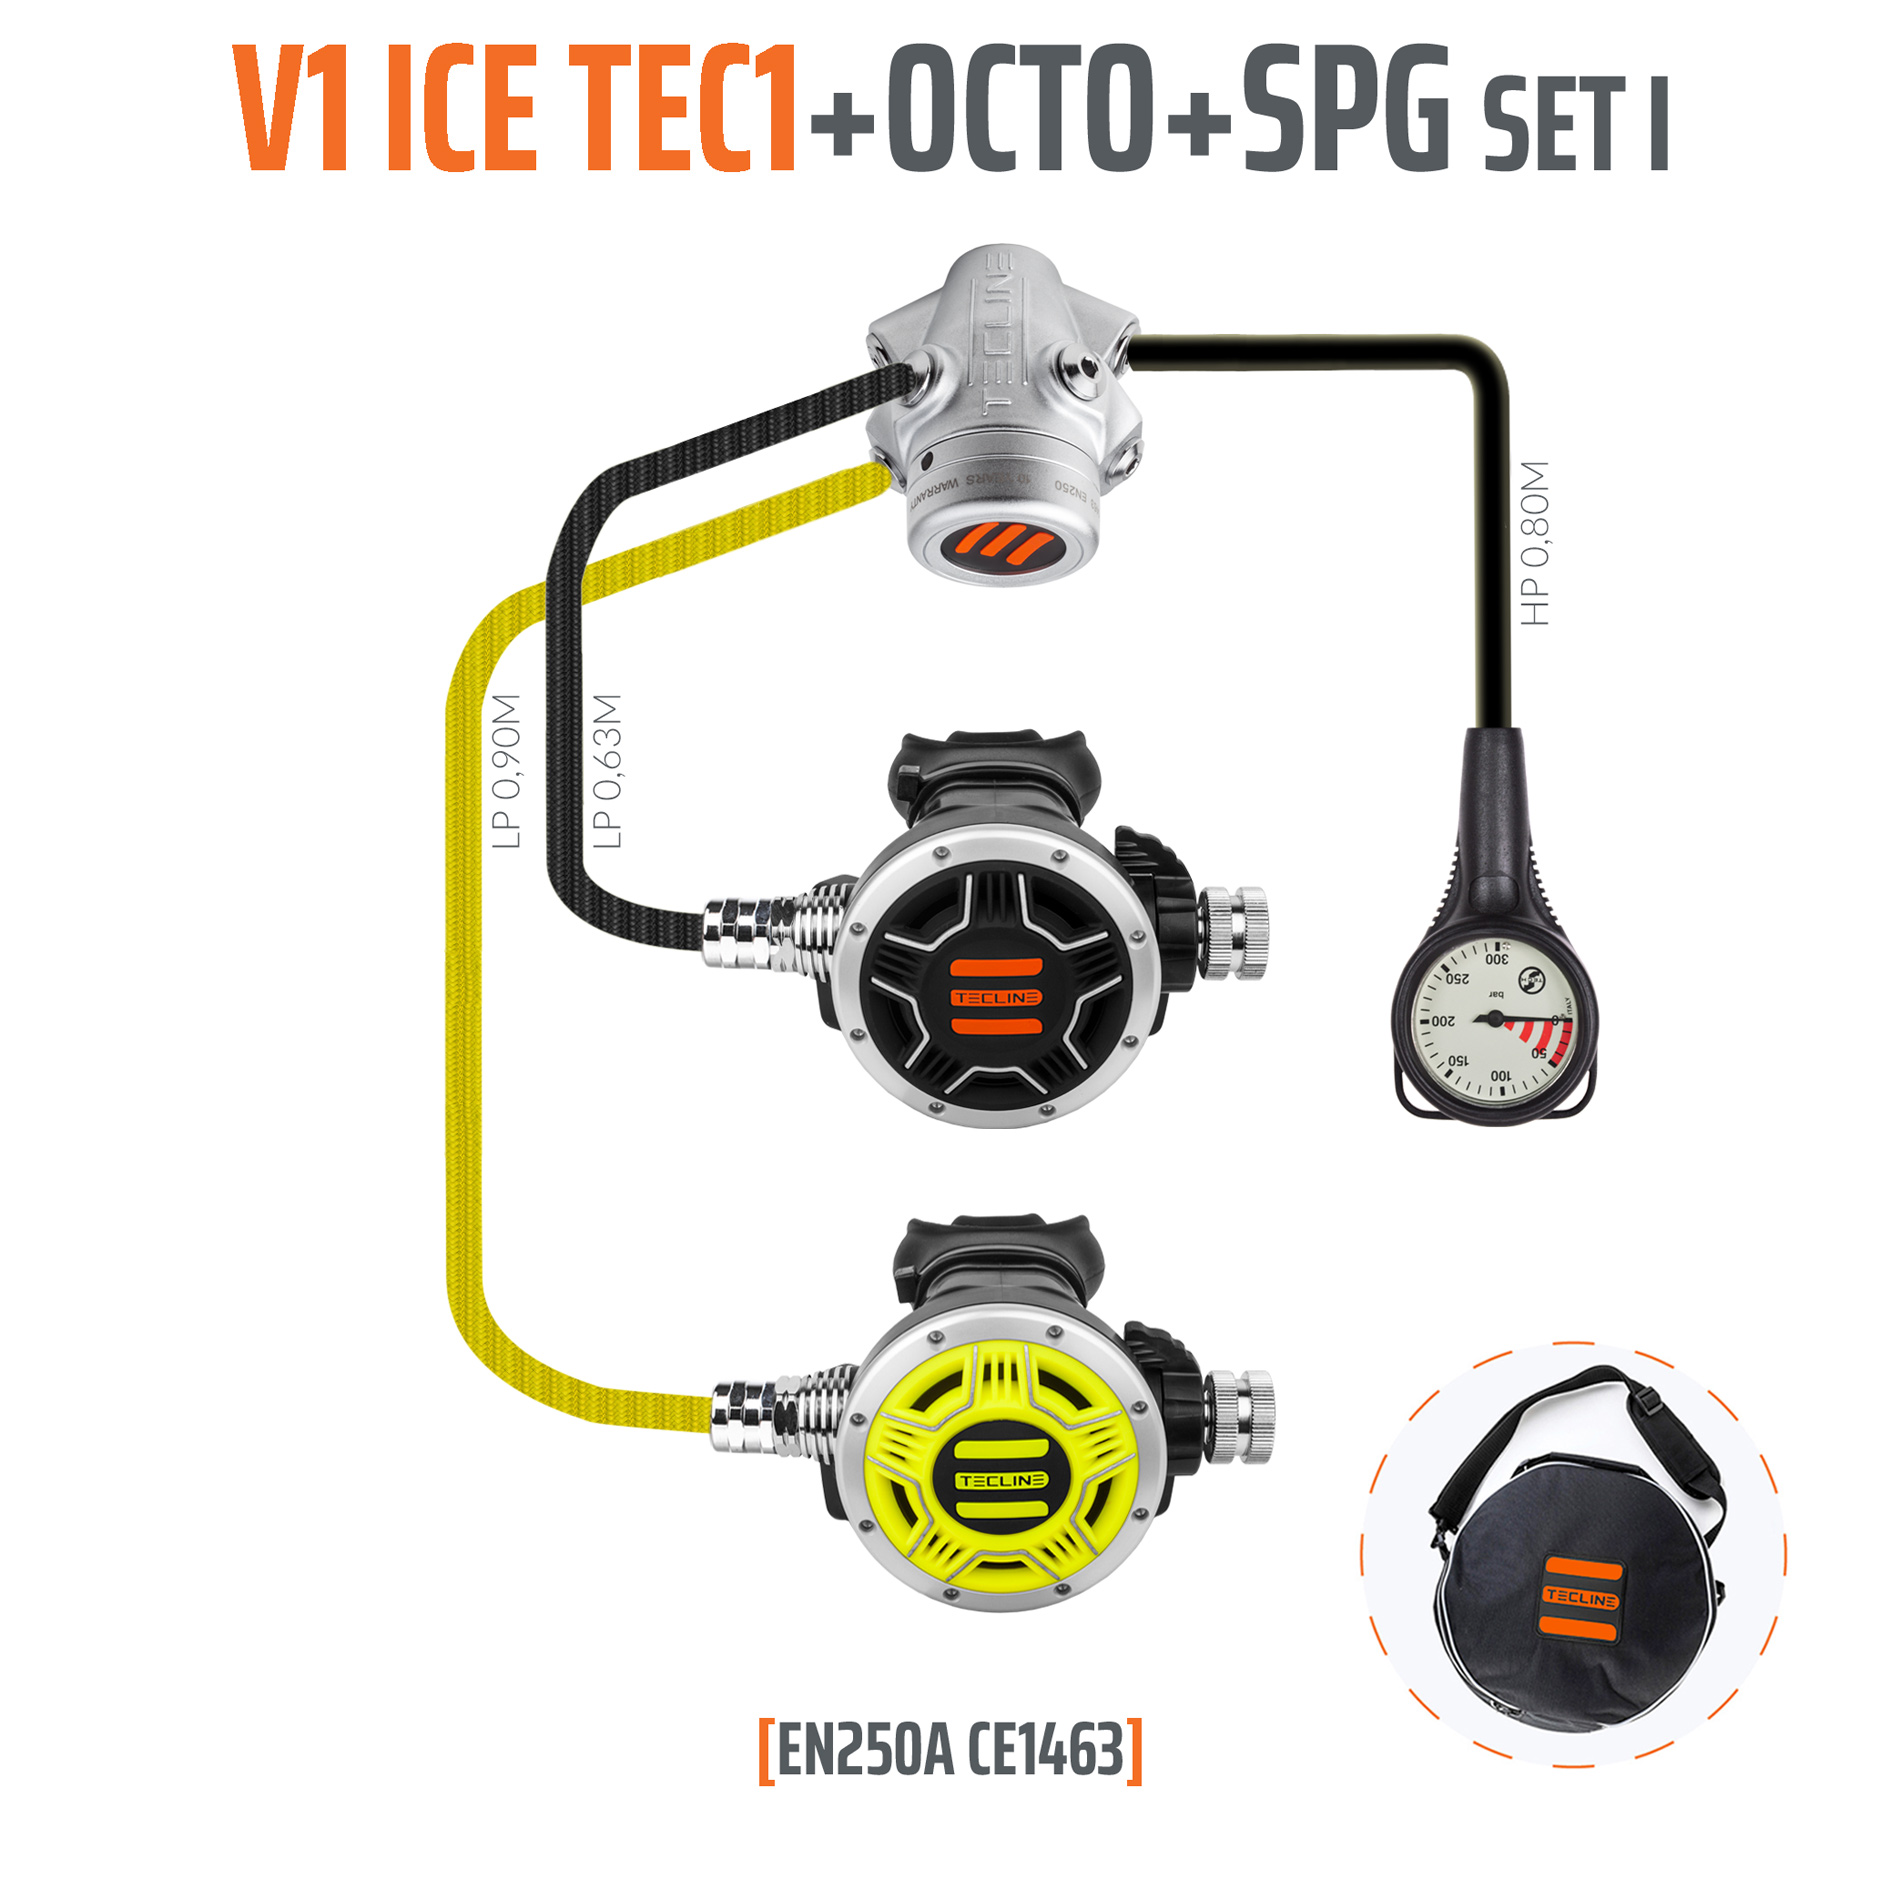 Tecline Regulator V1 ICE TEC1 set I with octo and SPG – EN250A